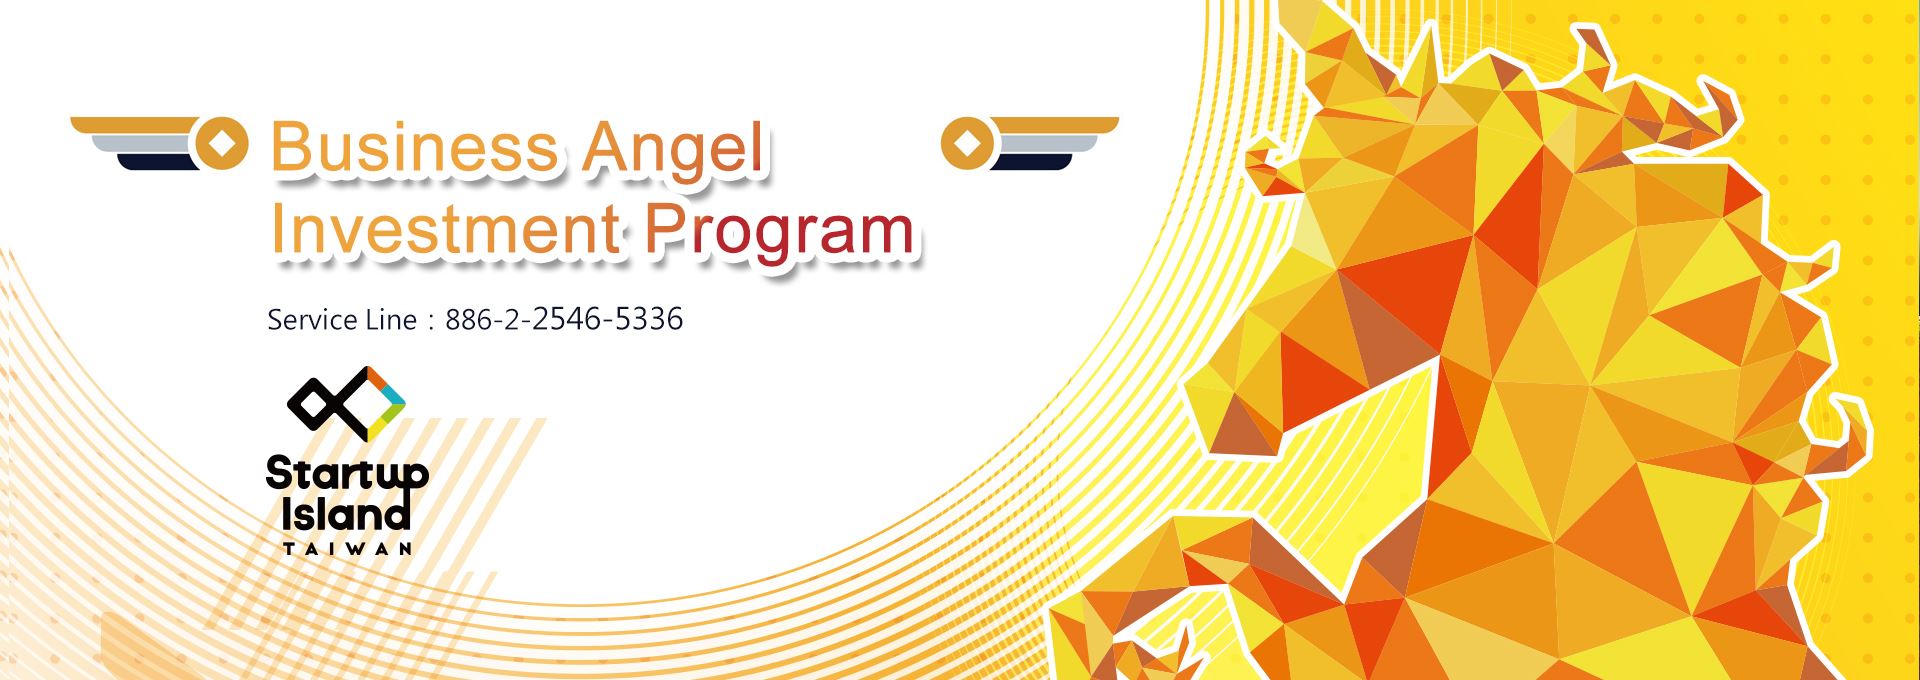 Business Angel Investment Program